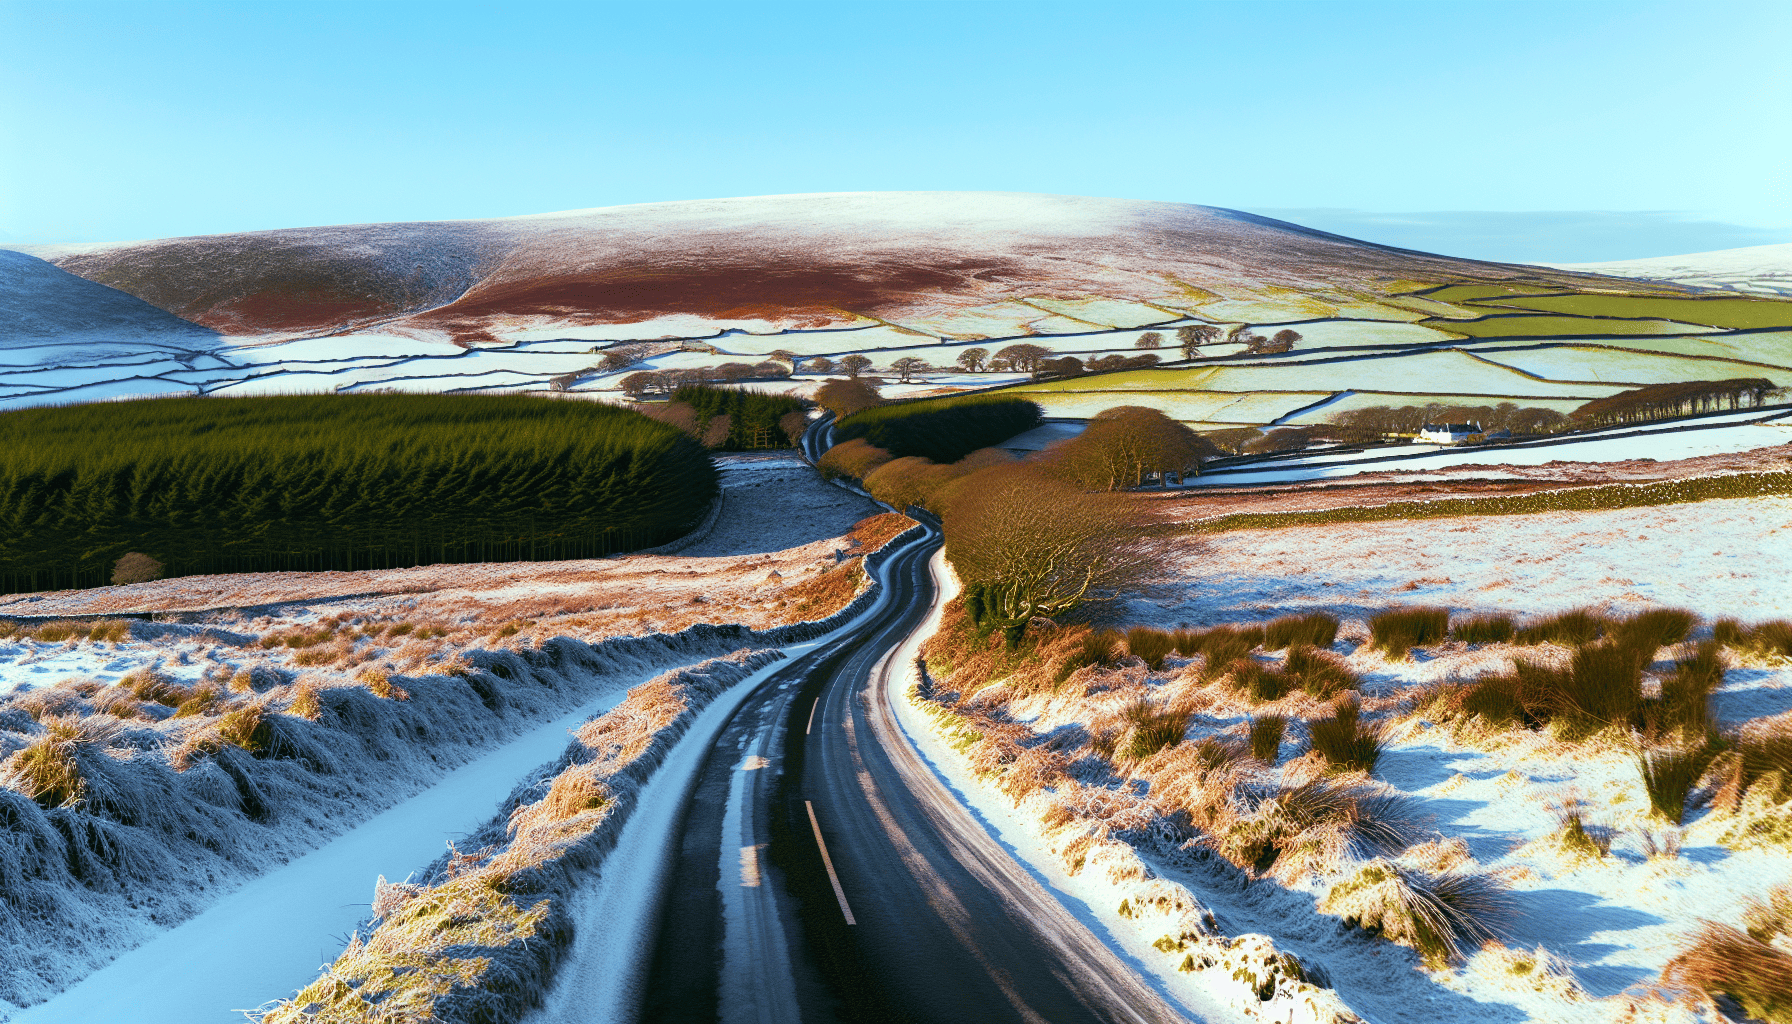 Scenic winter drive through Ireland's countryside